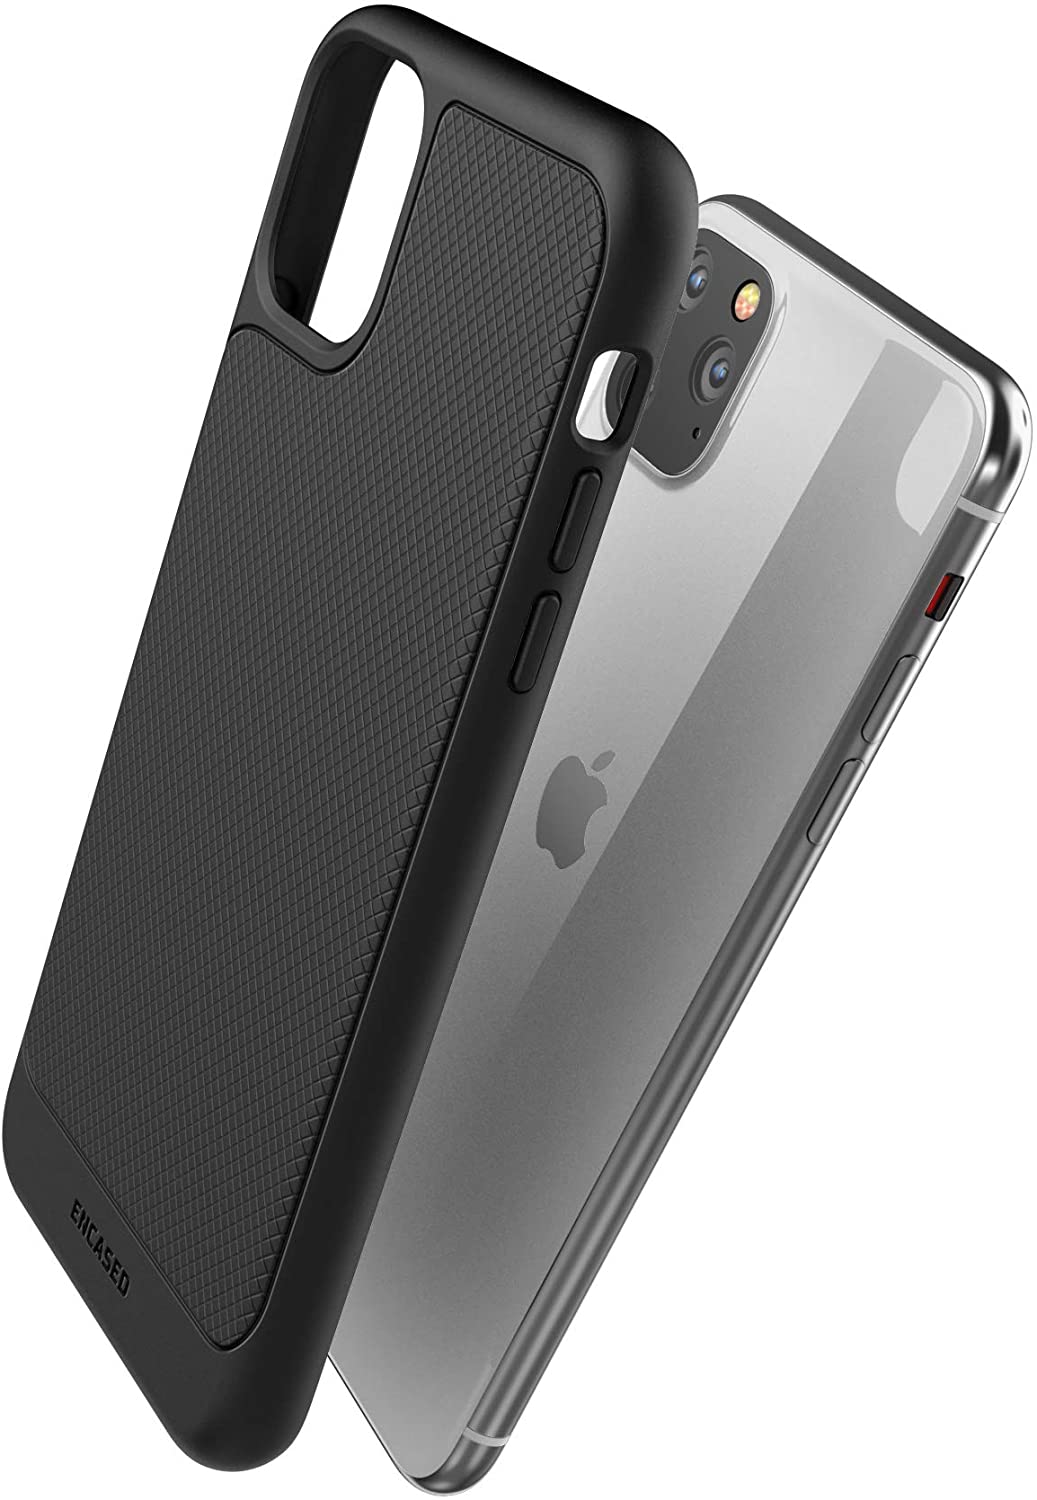 Encased iPhone 11 Pro Case (Thin Armor) Slim Flexible Grip Phone Cover - Black - e4cents